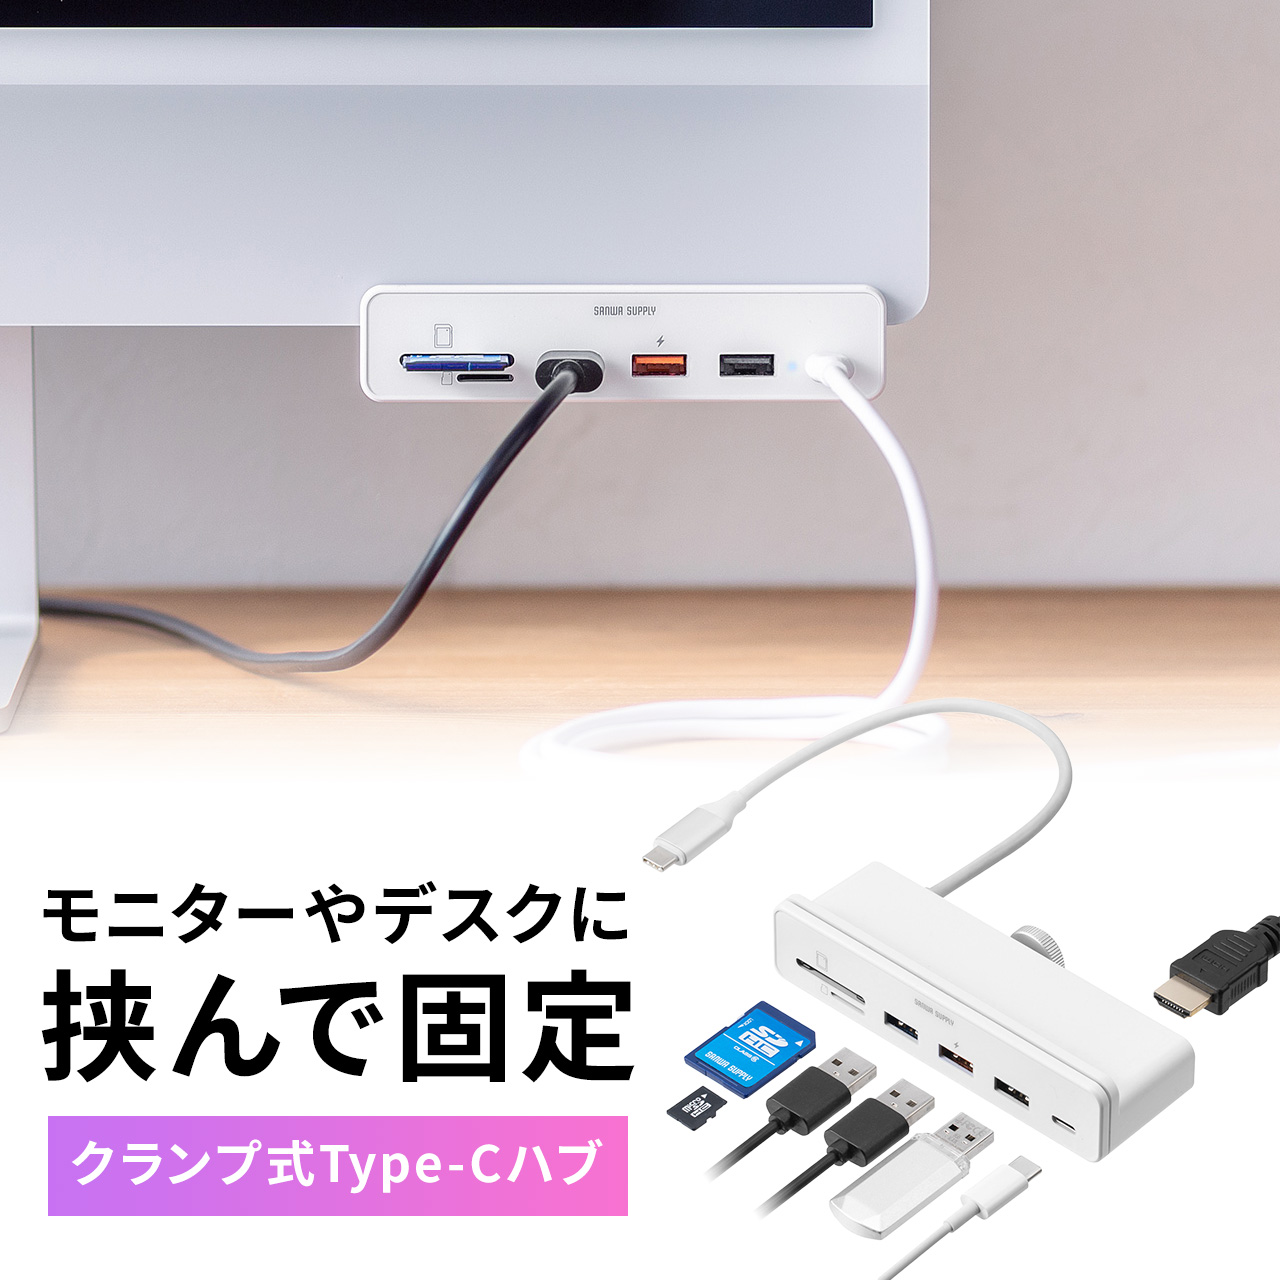 Amazon.co.jp: アイネックス USB電源 赤外線リモコン Type-A用 U20AA-MFVRM : パソコン・周辺機器